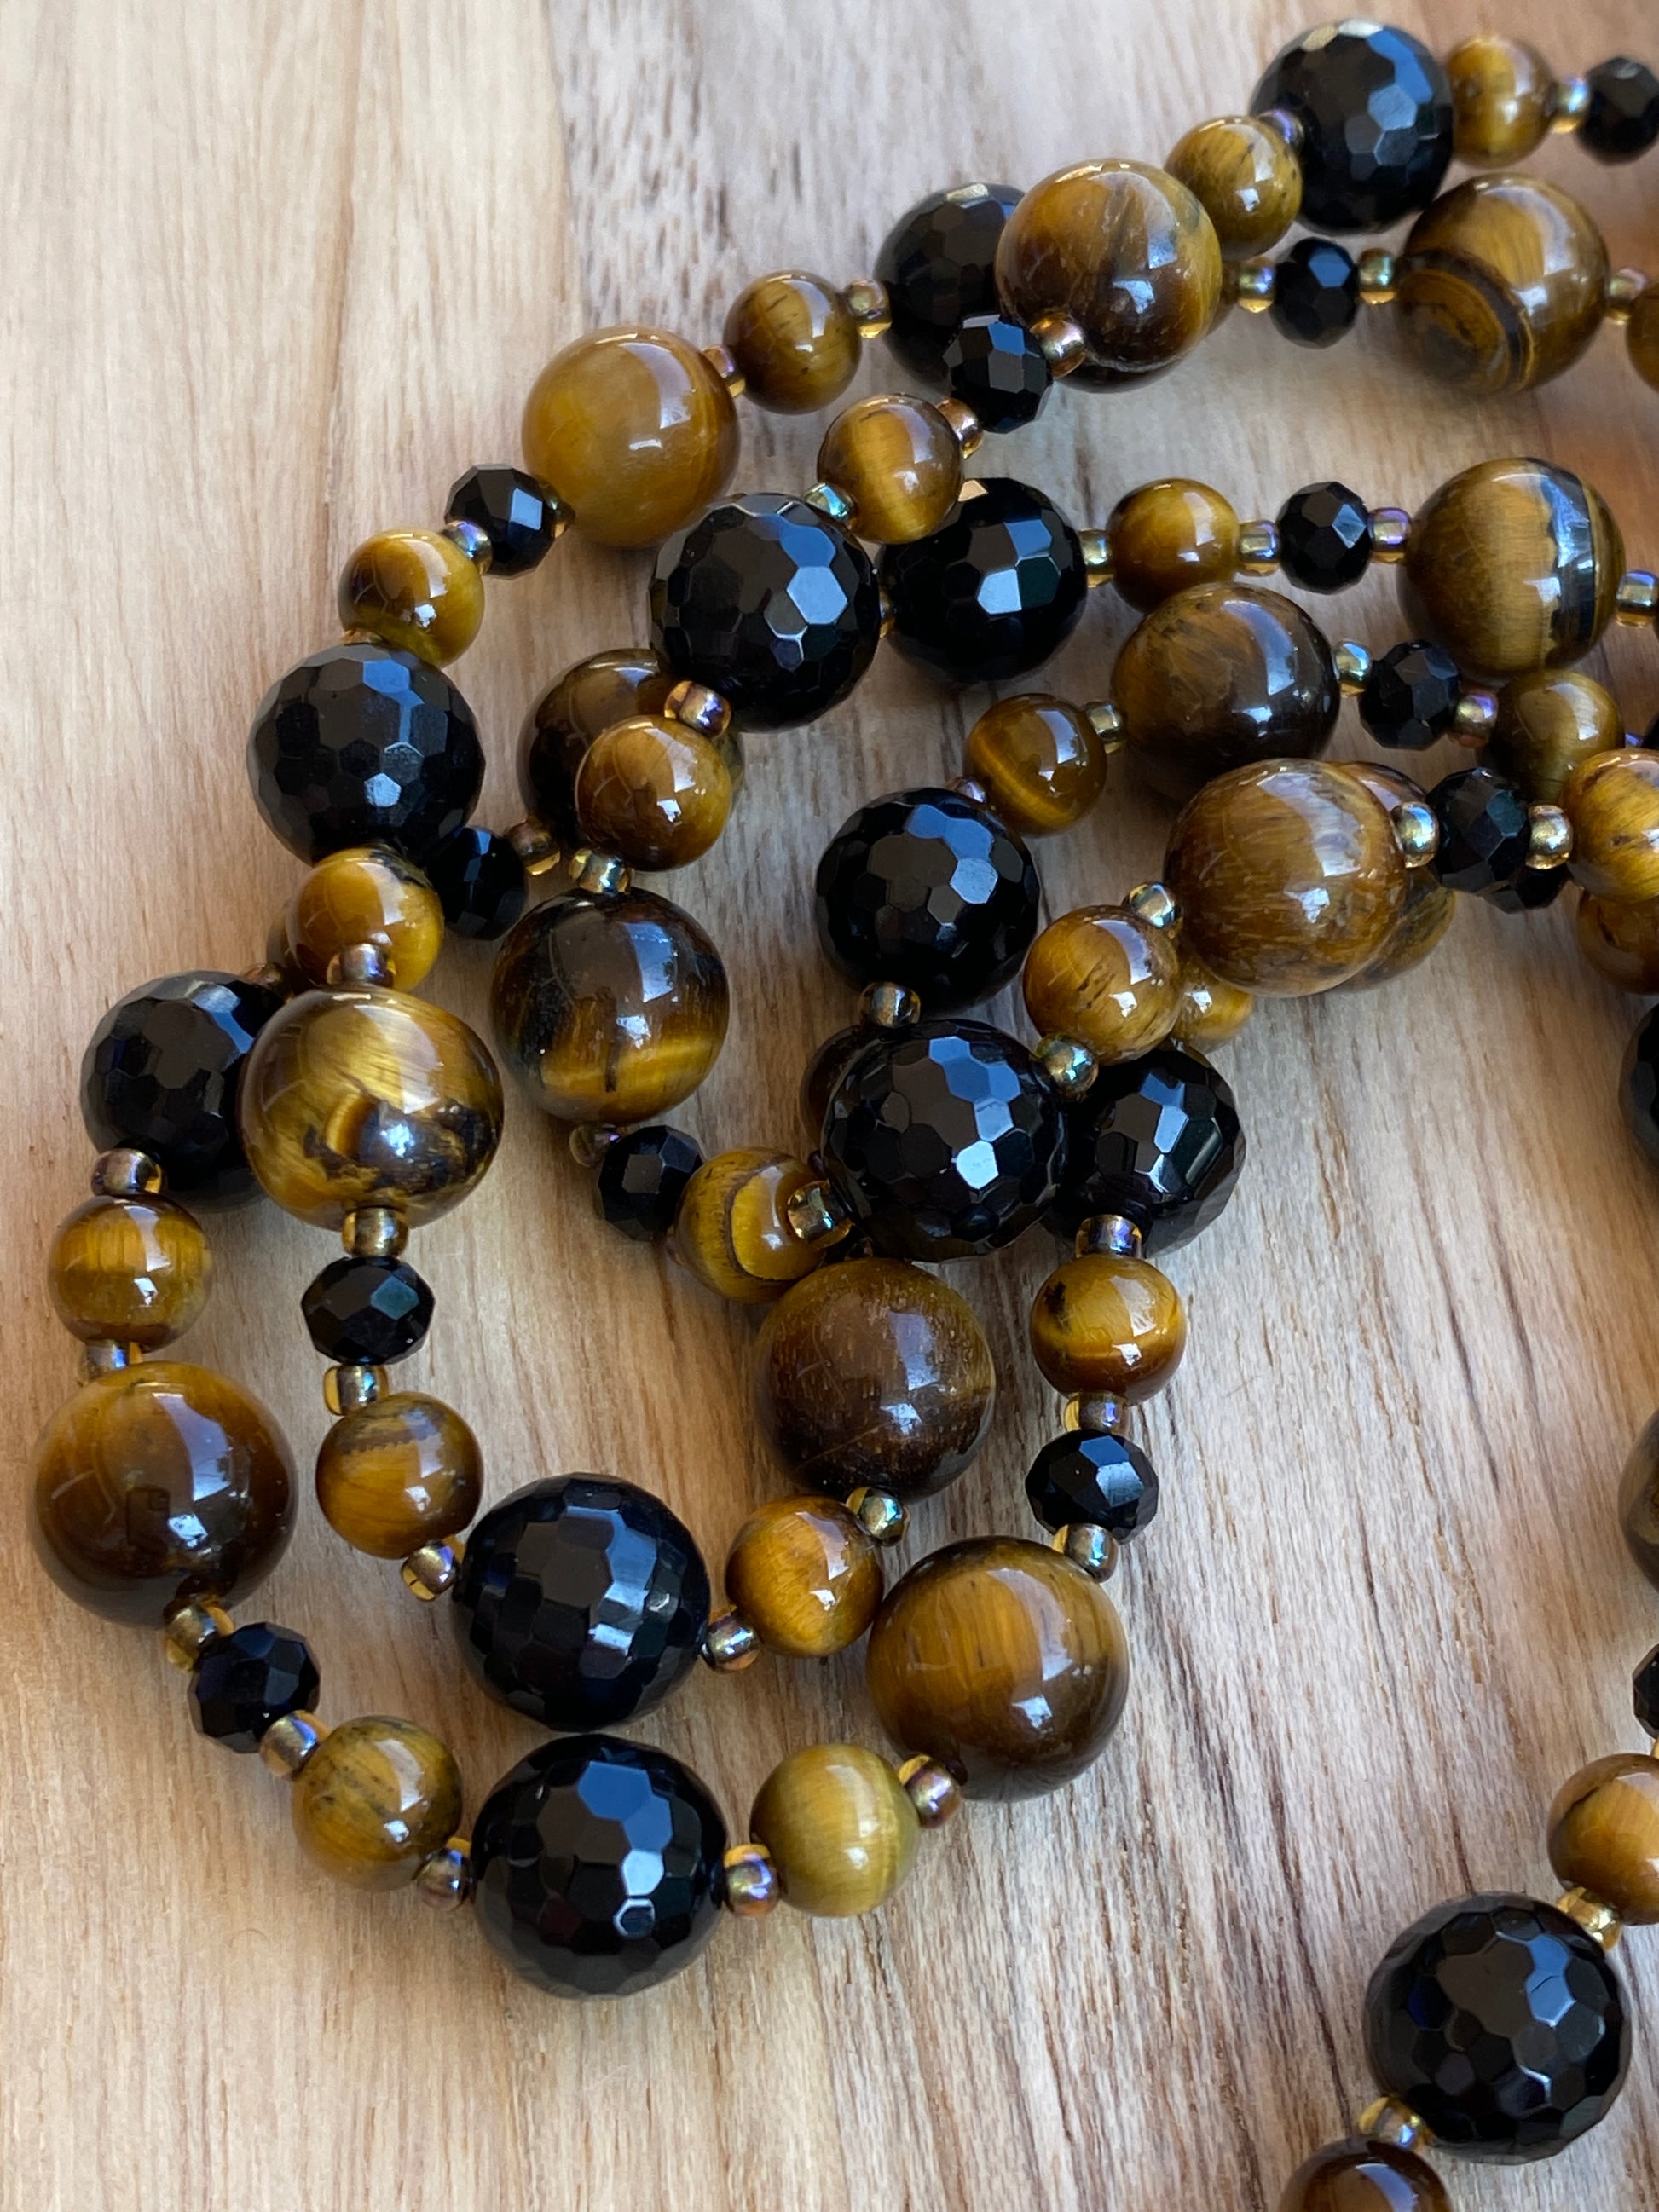 60" Extra Long Wraparound Black Onyx and Tigereye Beaded Necklace with Crystal Beads - My Urban Gems